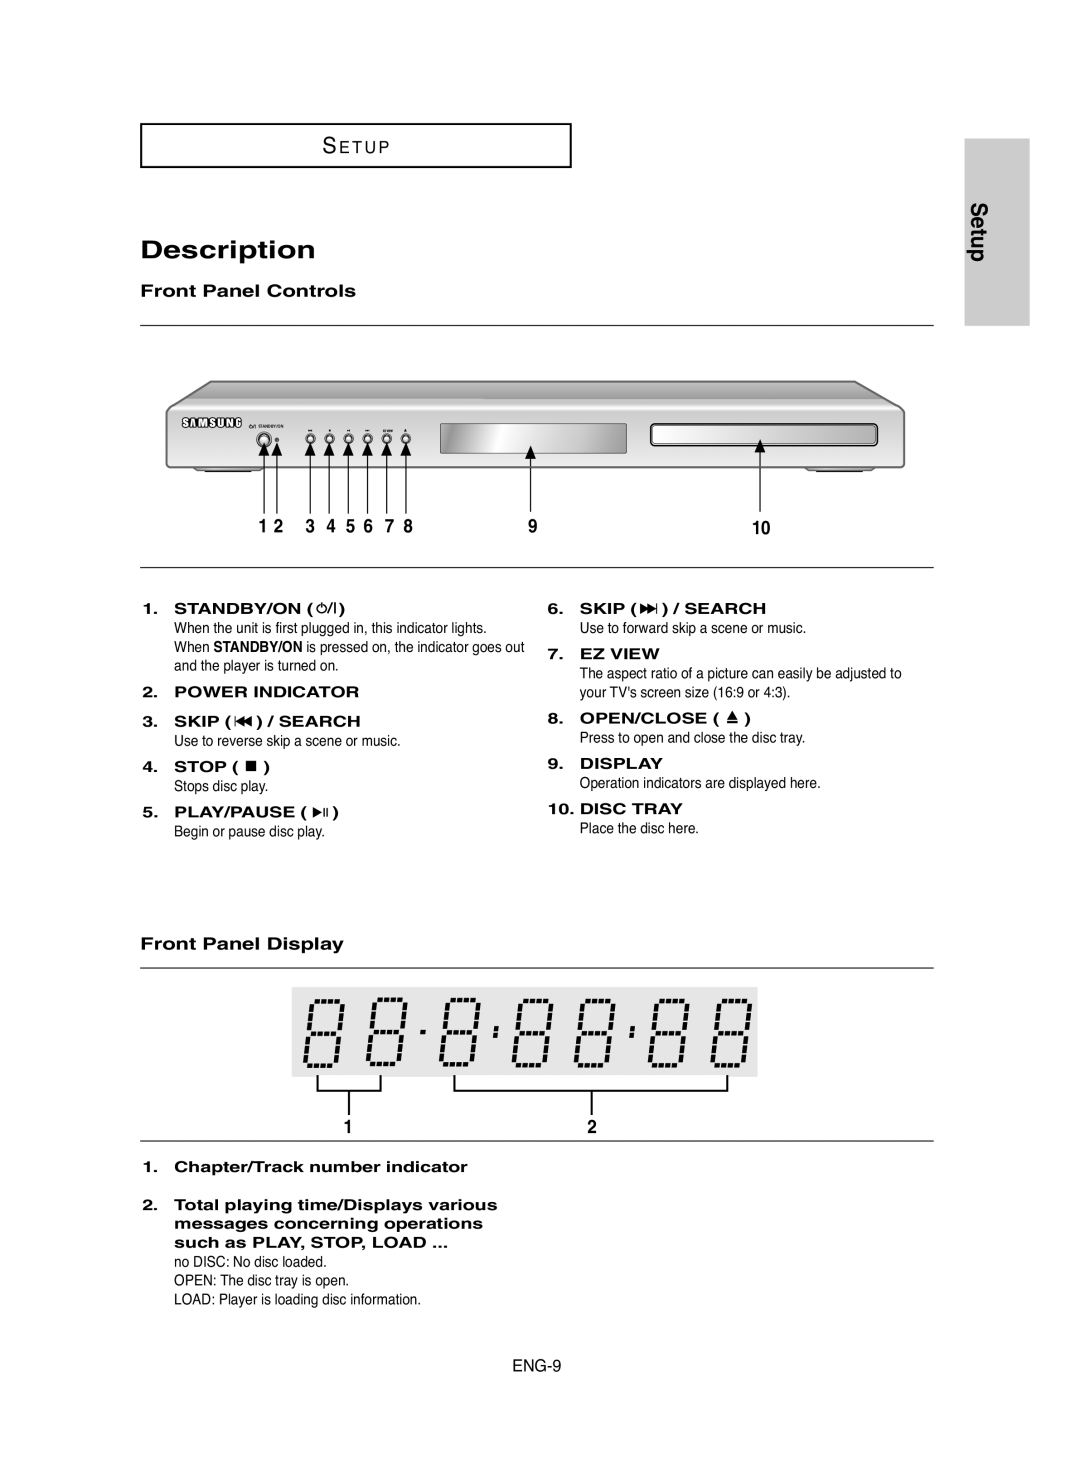 Samsung DVD-HD755 manual Description, Setup, S E T U P, Front Panel Controls, Front Panel Display, ENG-9 